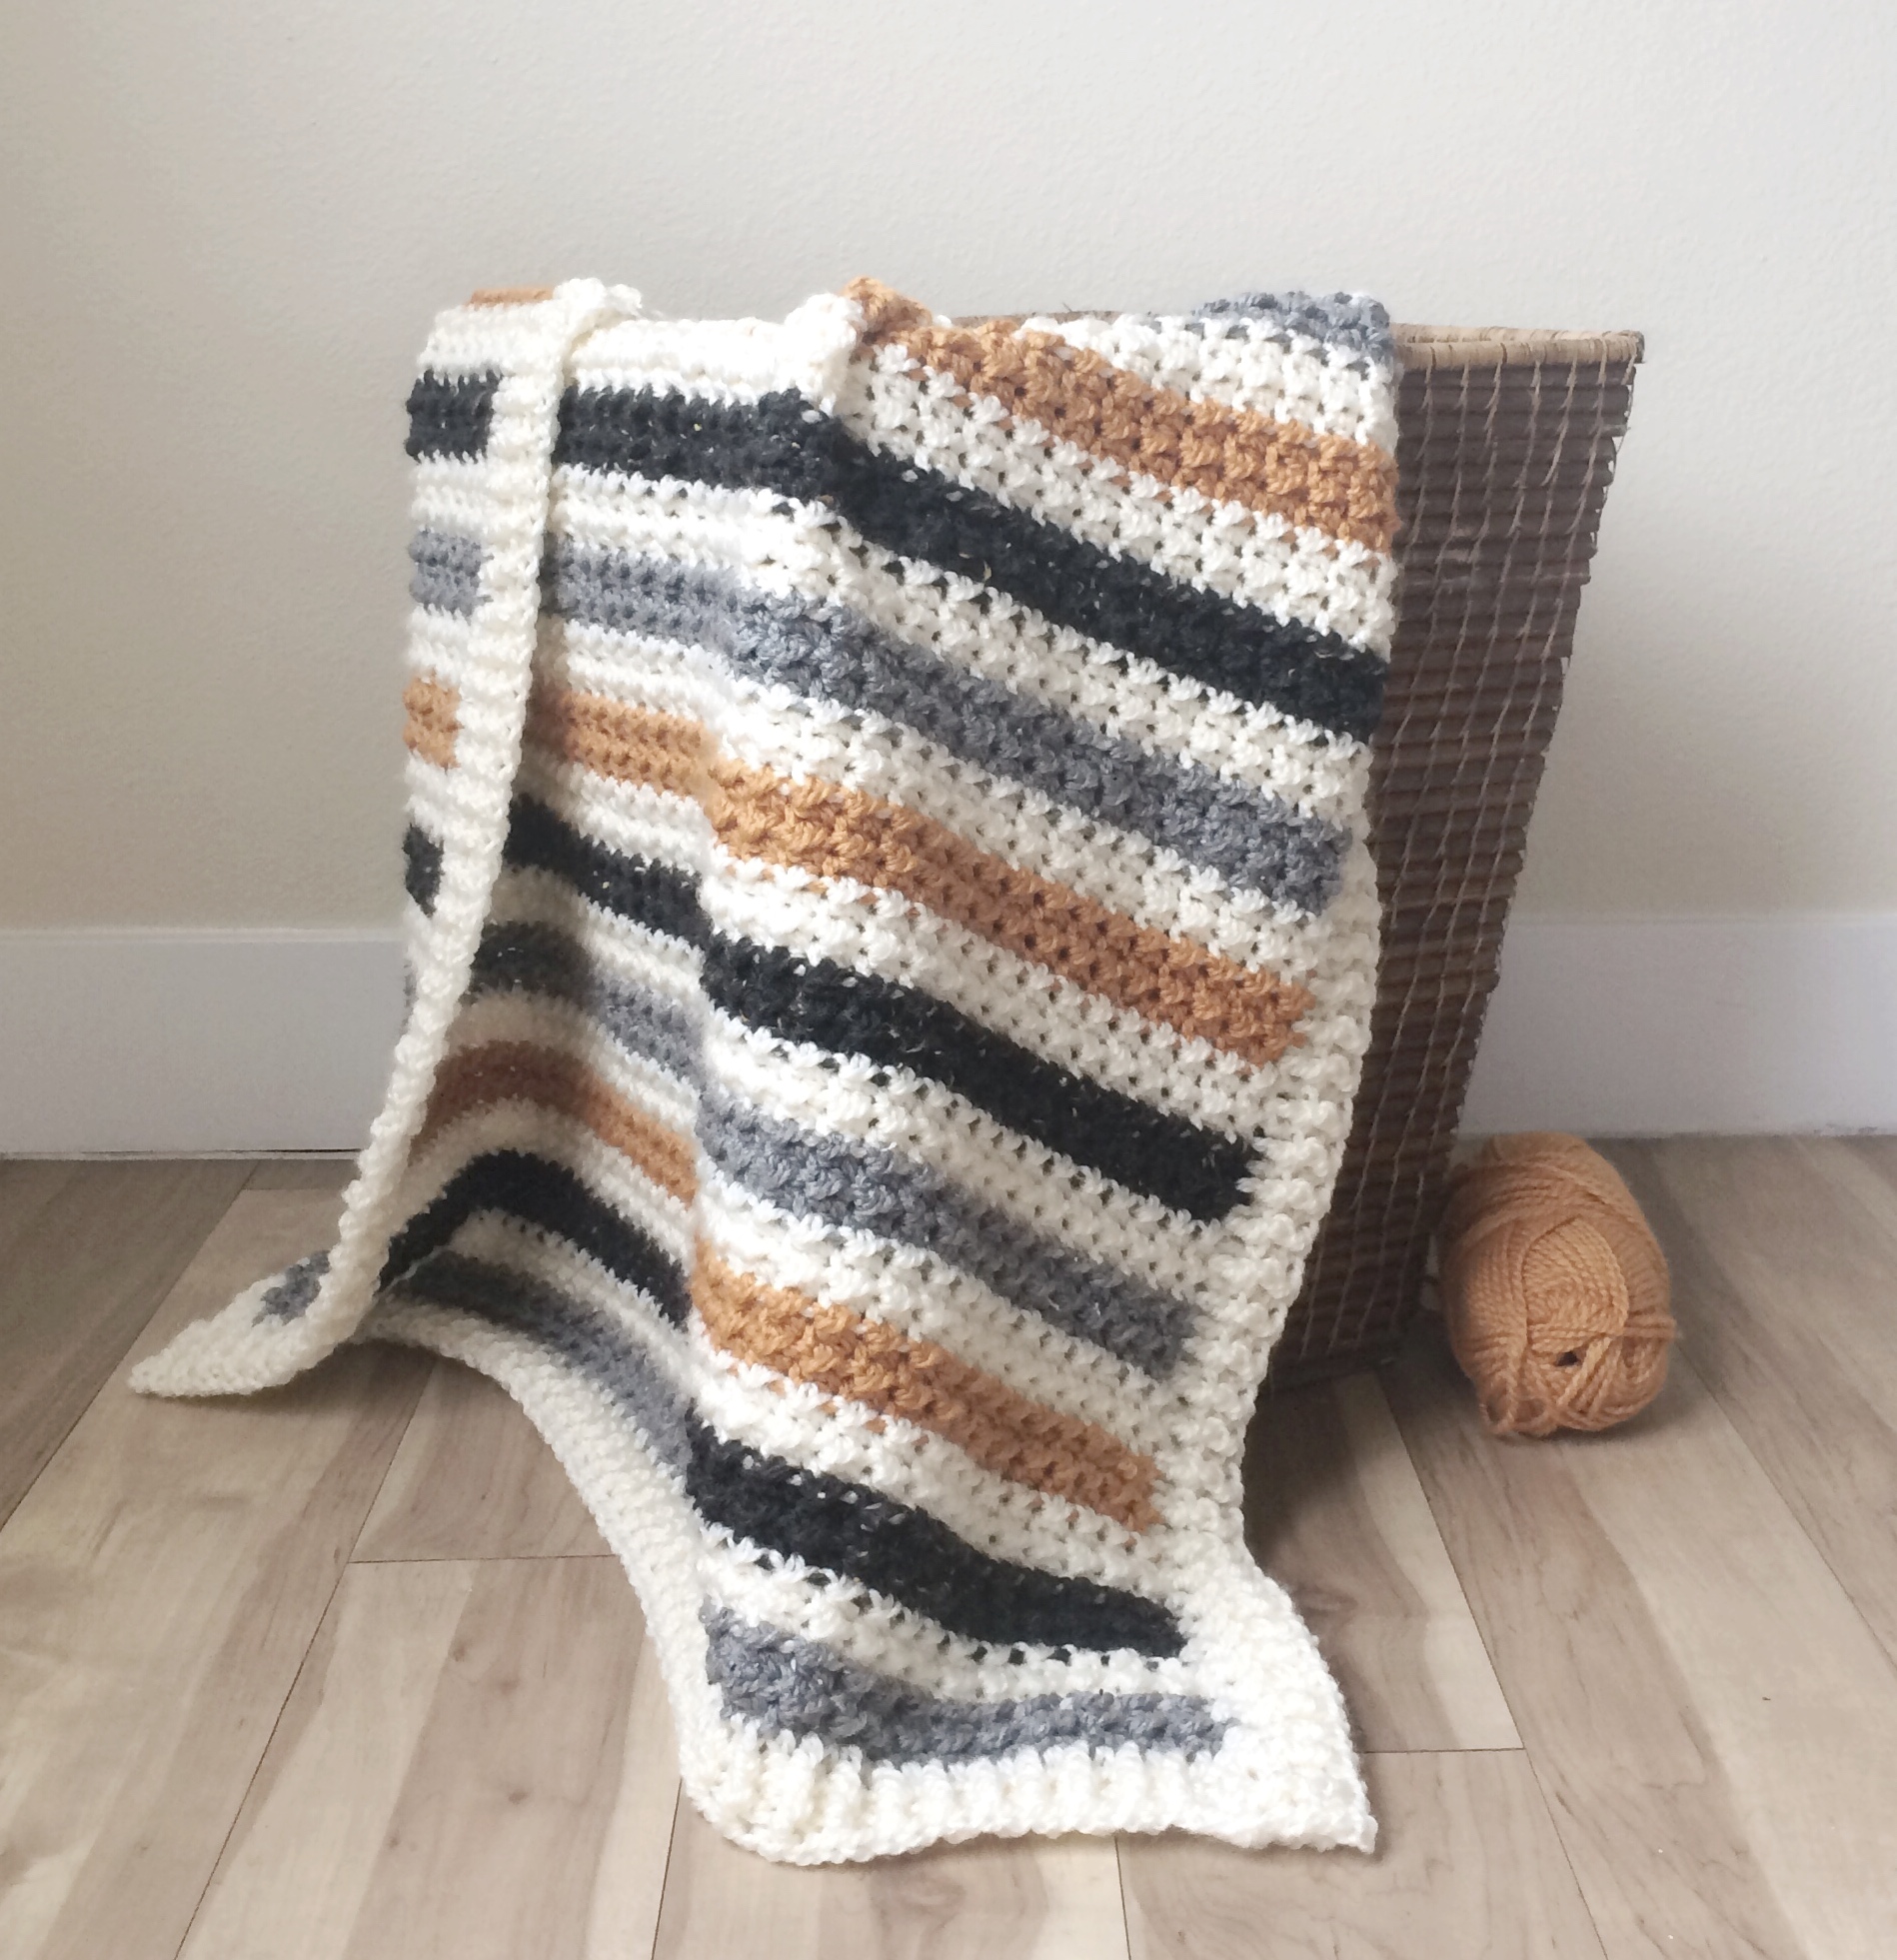 Crochet Striped Even Moss Stitch Blanket | Daisy Farm Crafts